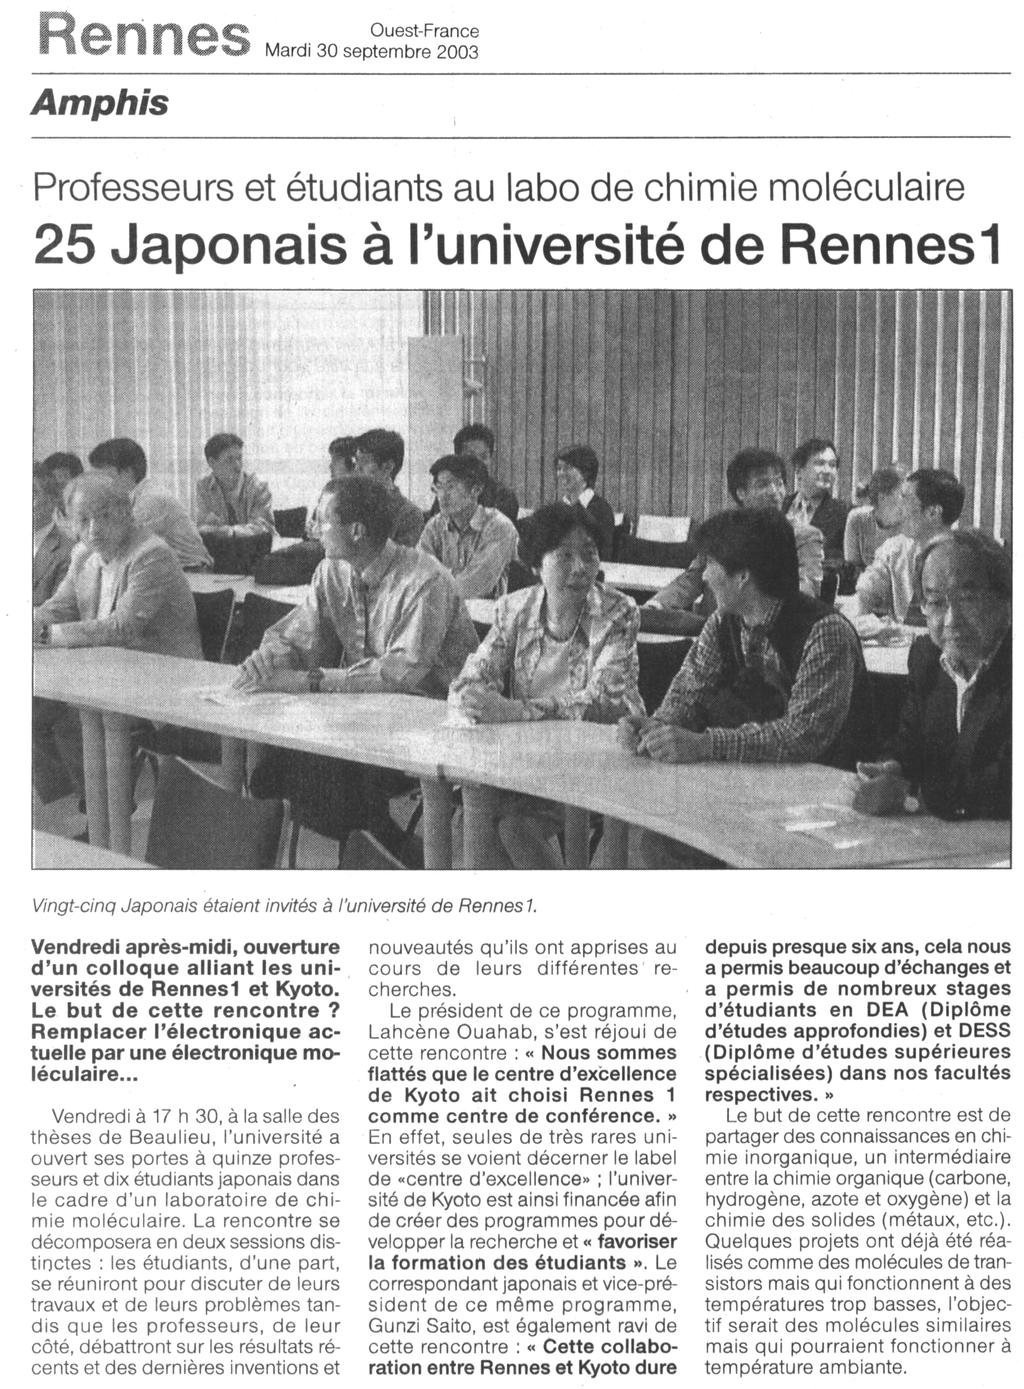 Himeji + Tokyo + IMS +Argonne) Faculty+PD Kyoto 8 (Sci. 4 + Eng.